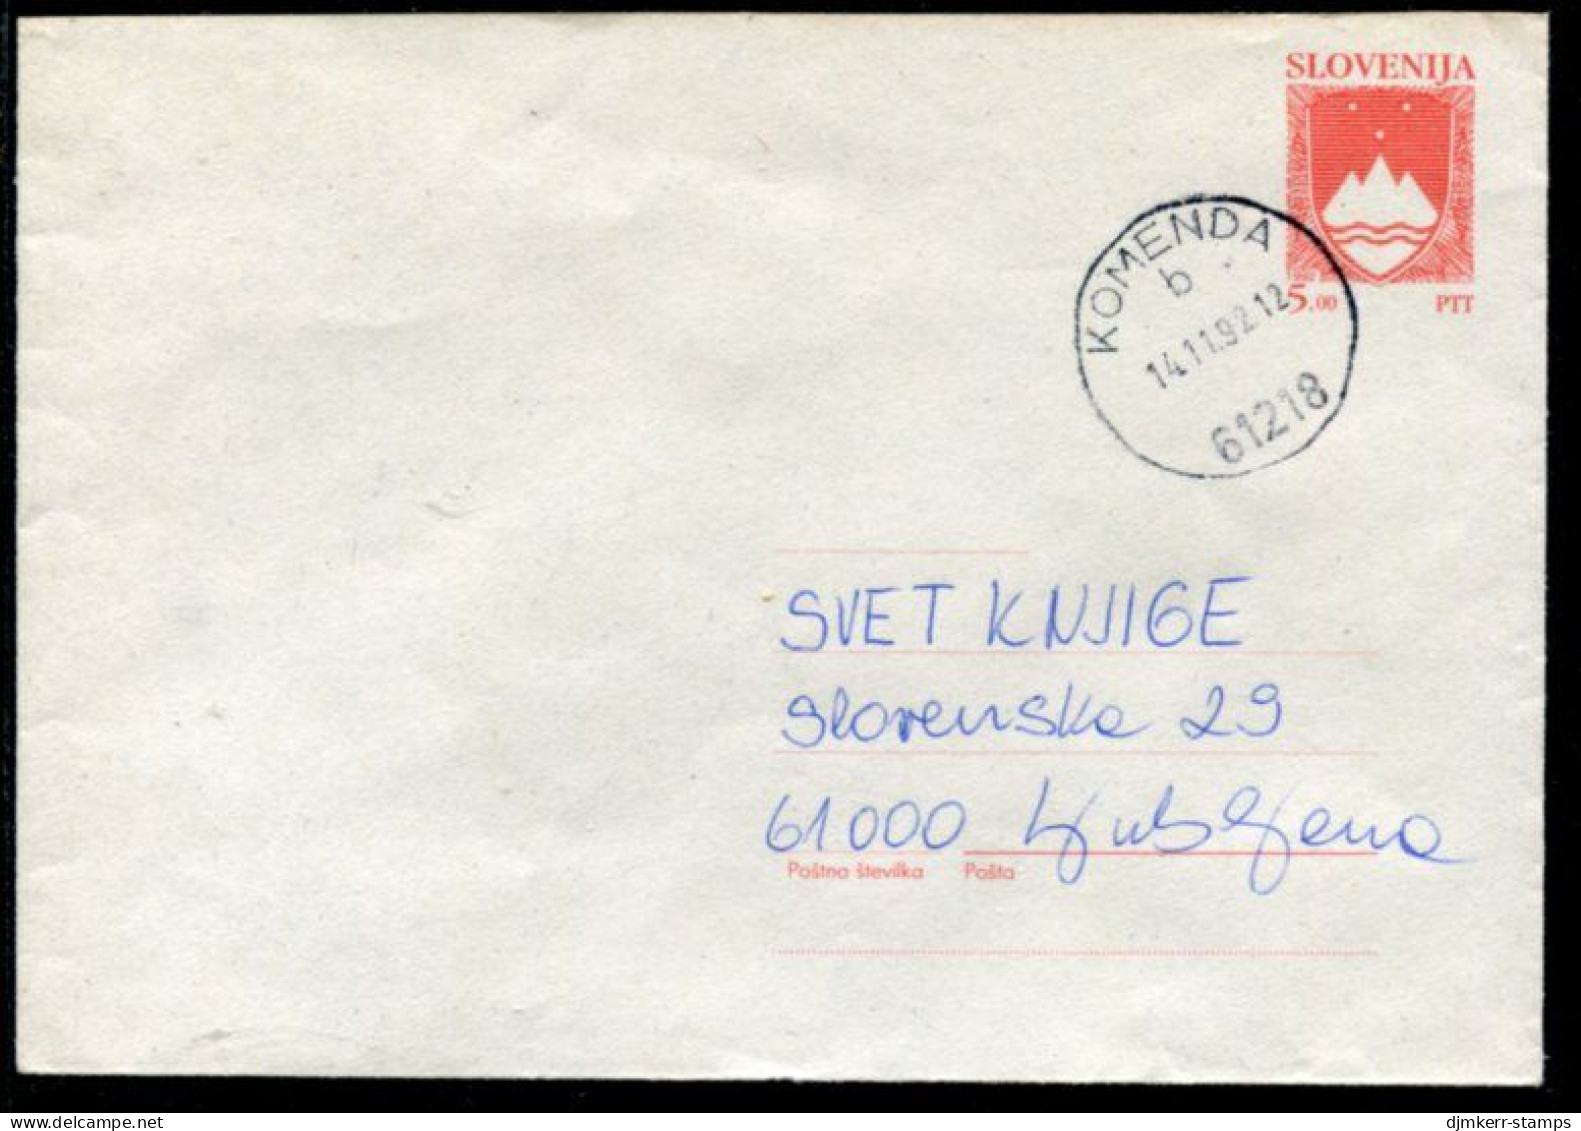 SLOVENIA 1992 5.00 T. Stationery Envelope On Grey Paper Used.  Michel U1b - Slovenia